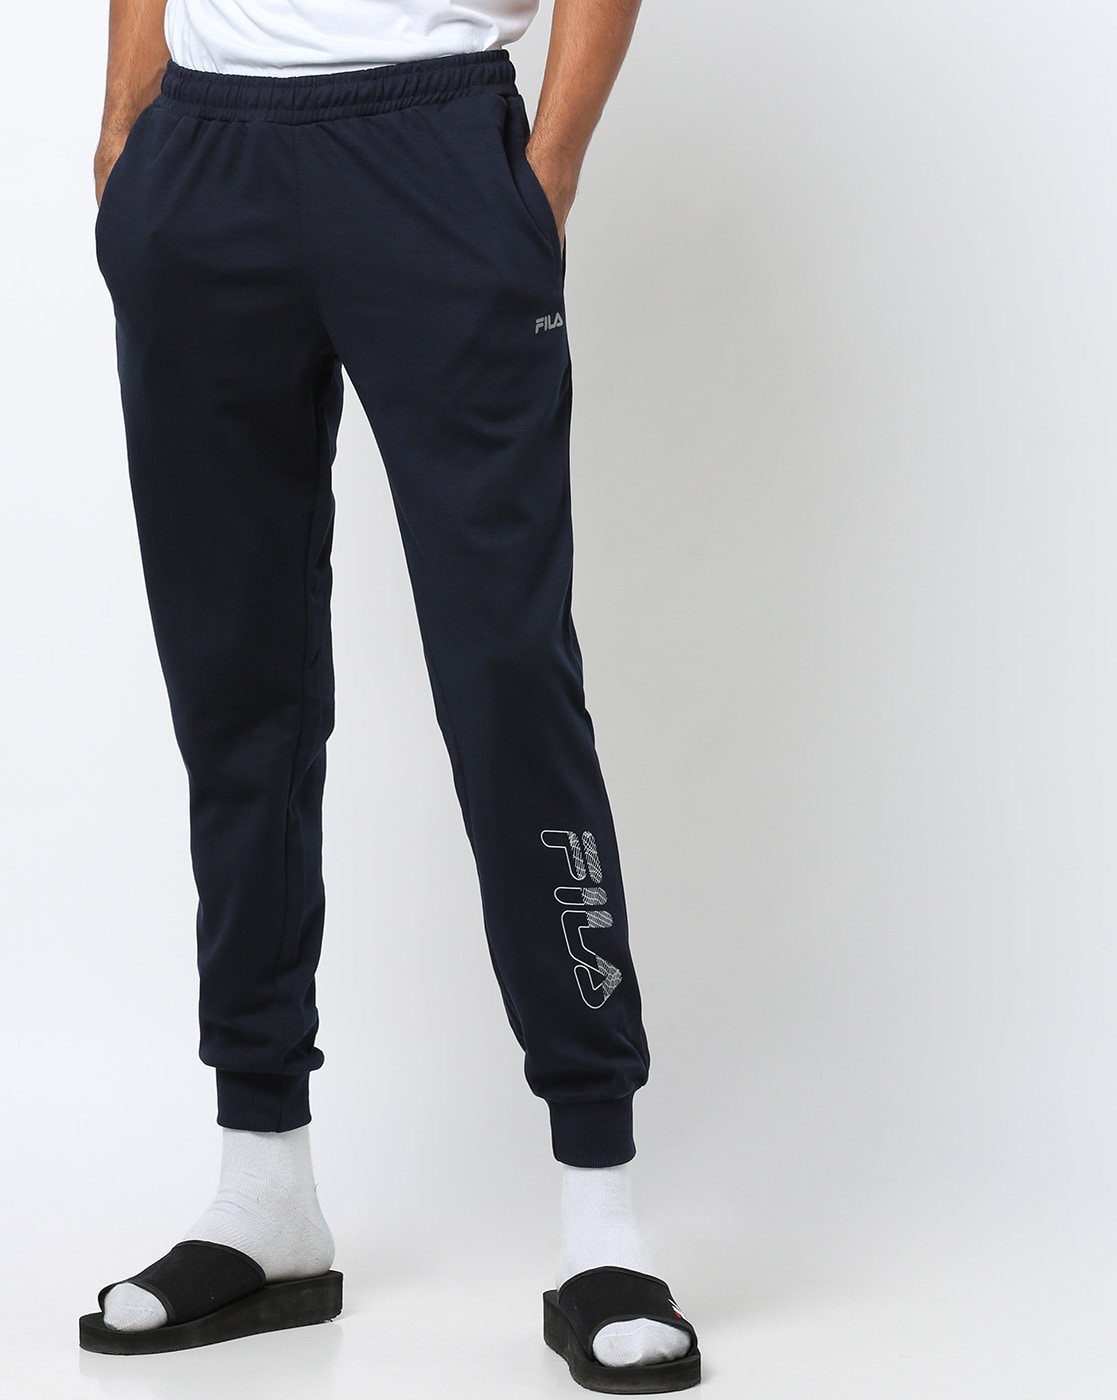 fila navy blue sweatpants